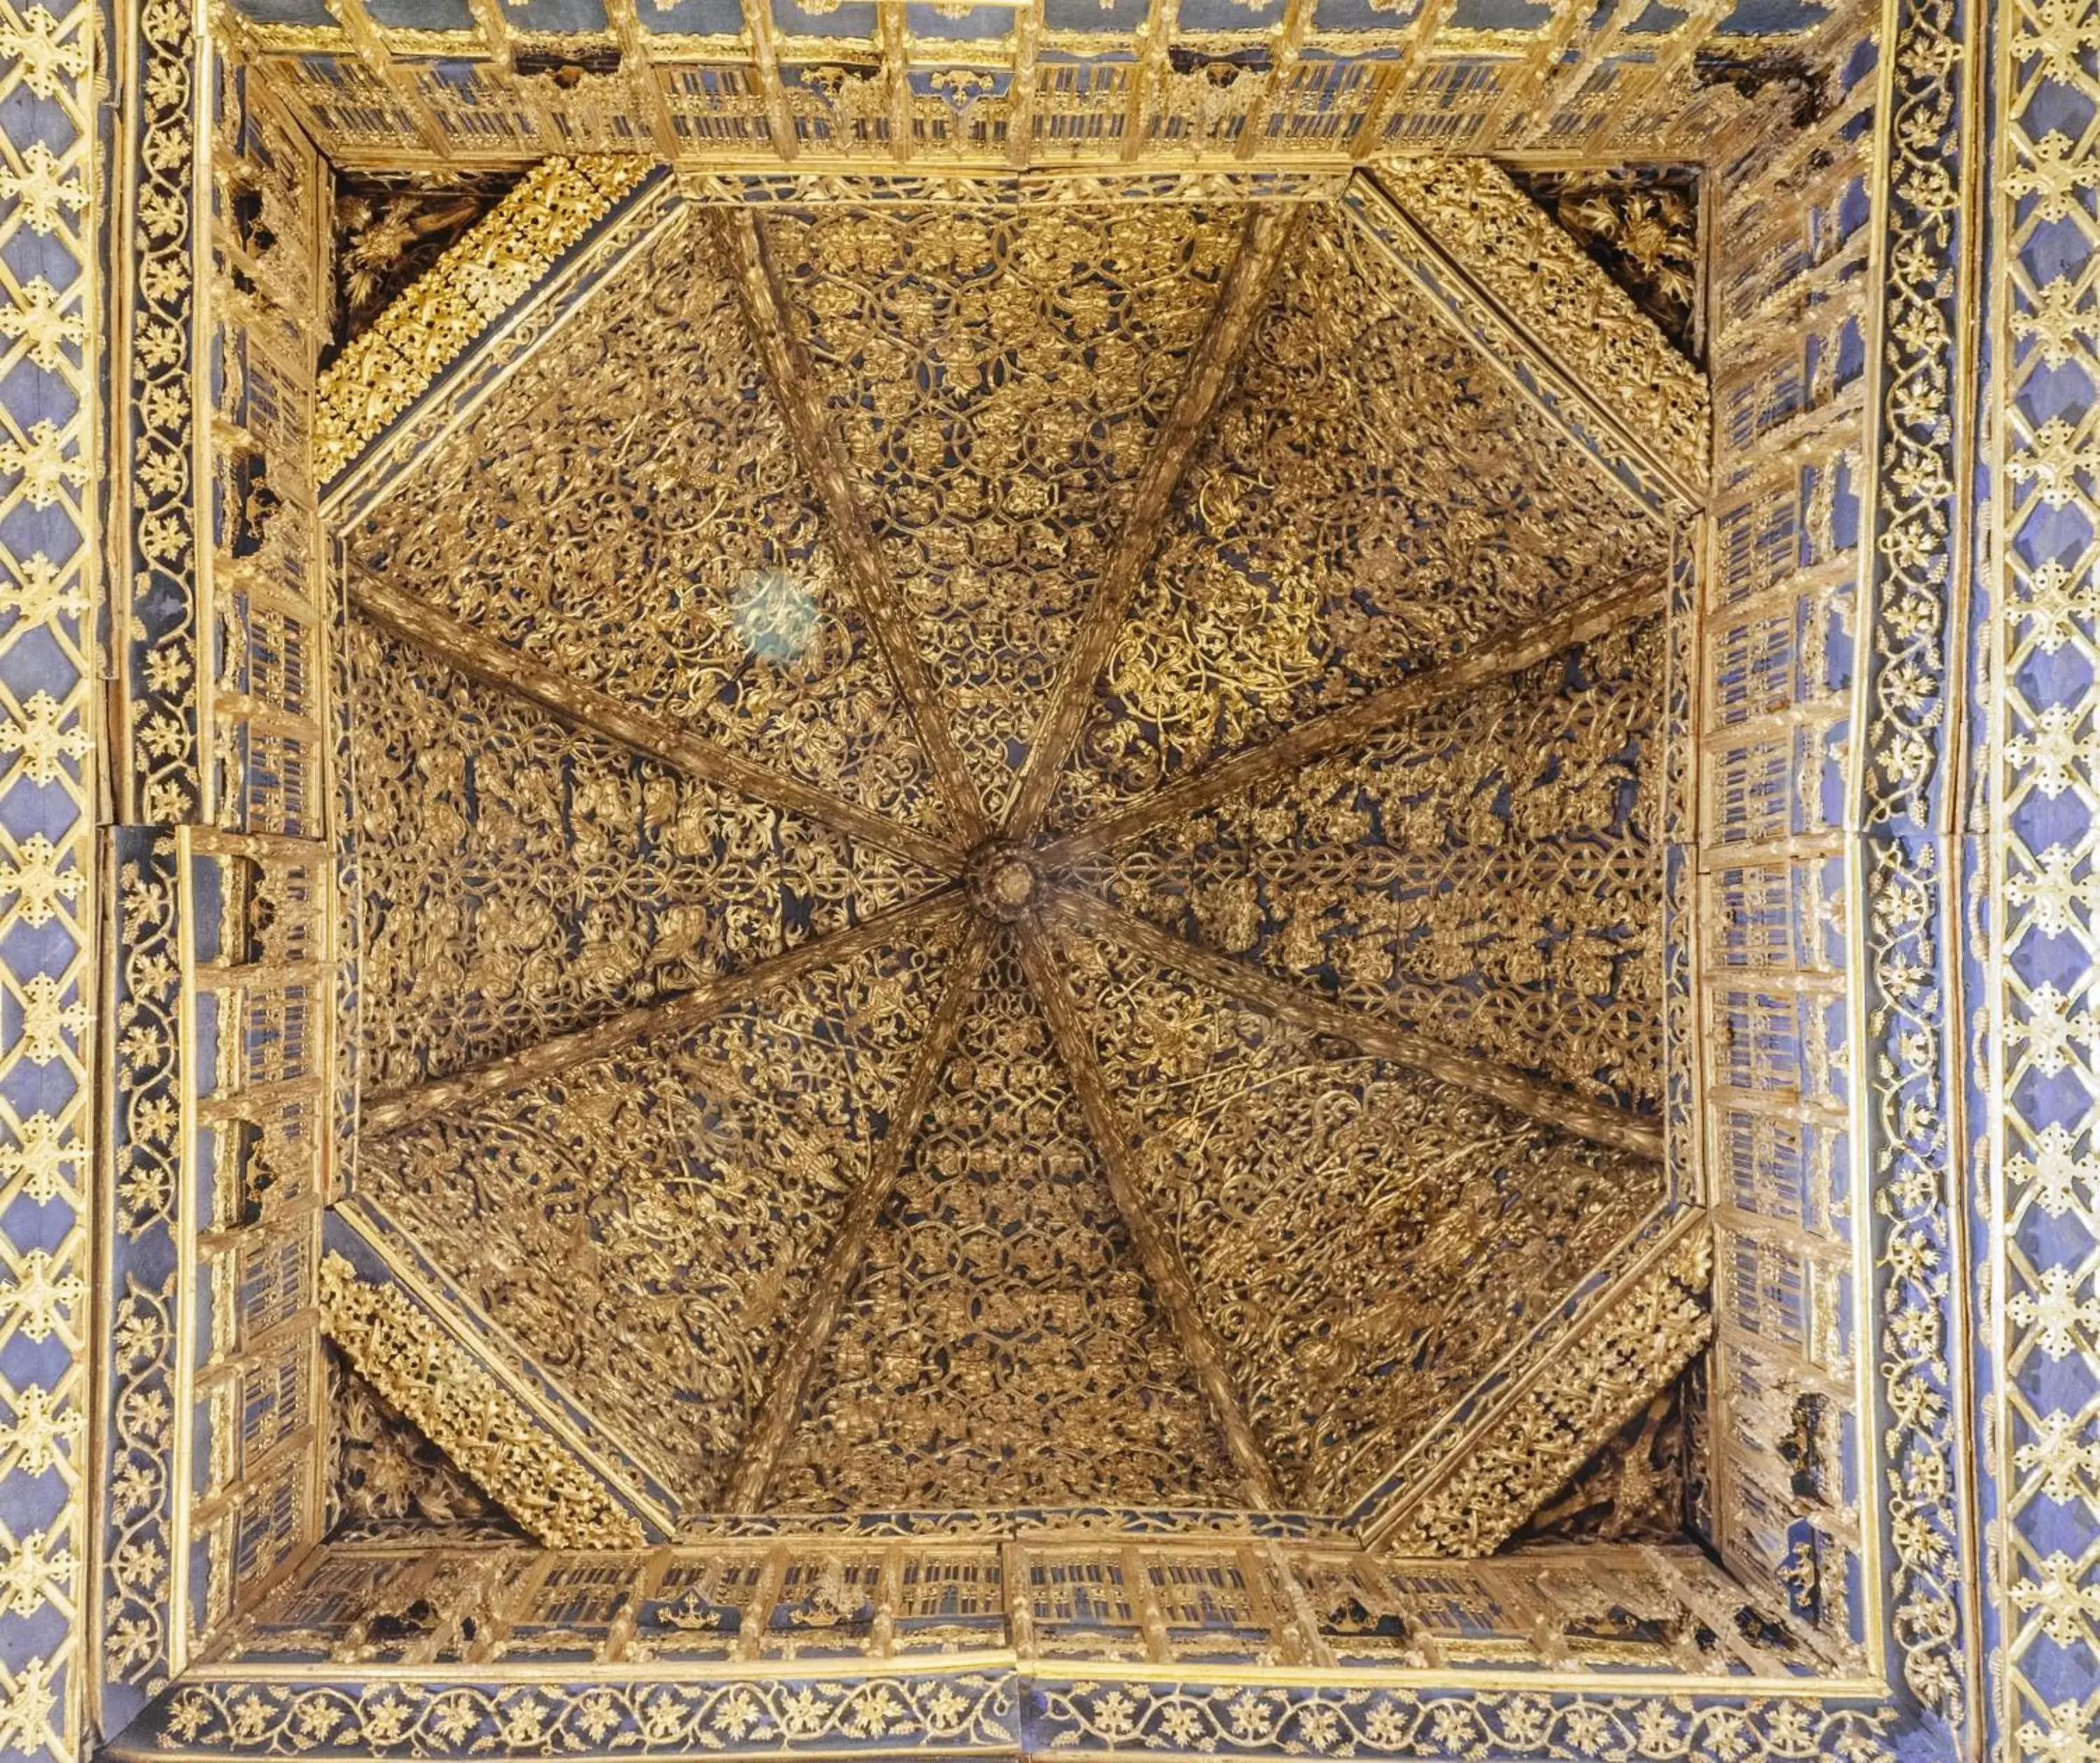 Decorative detail in Parador de Zafra